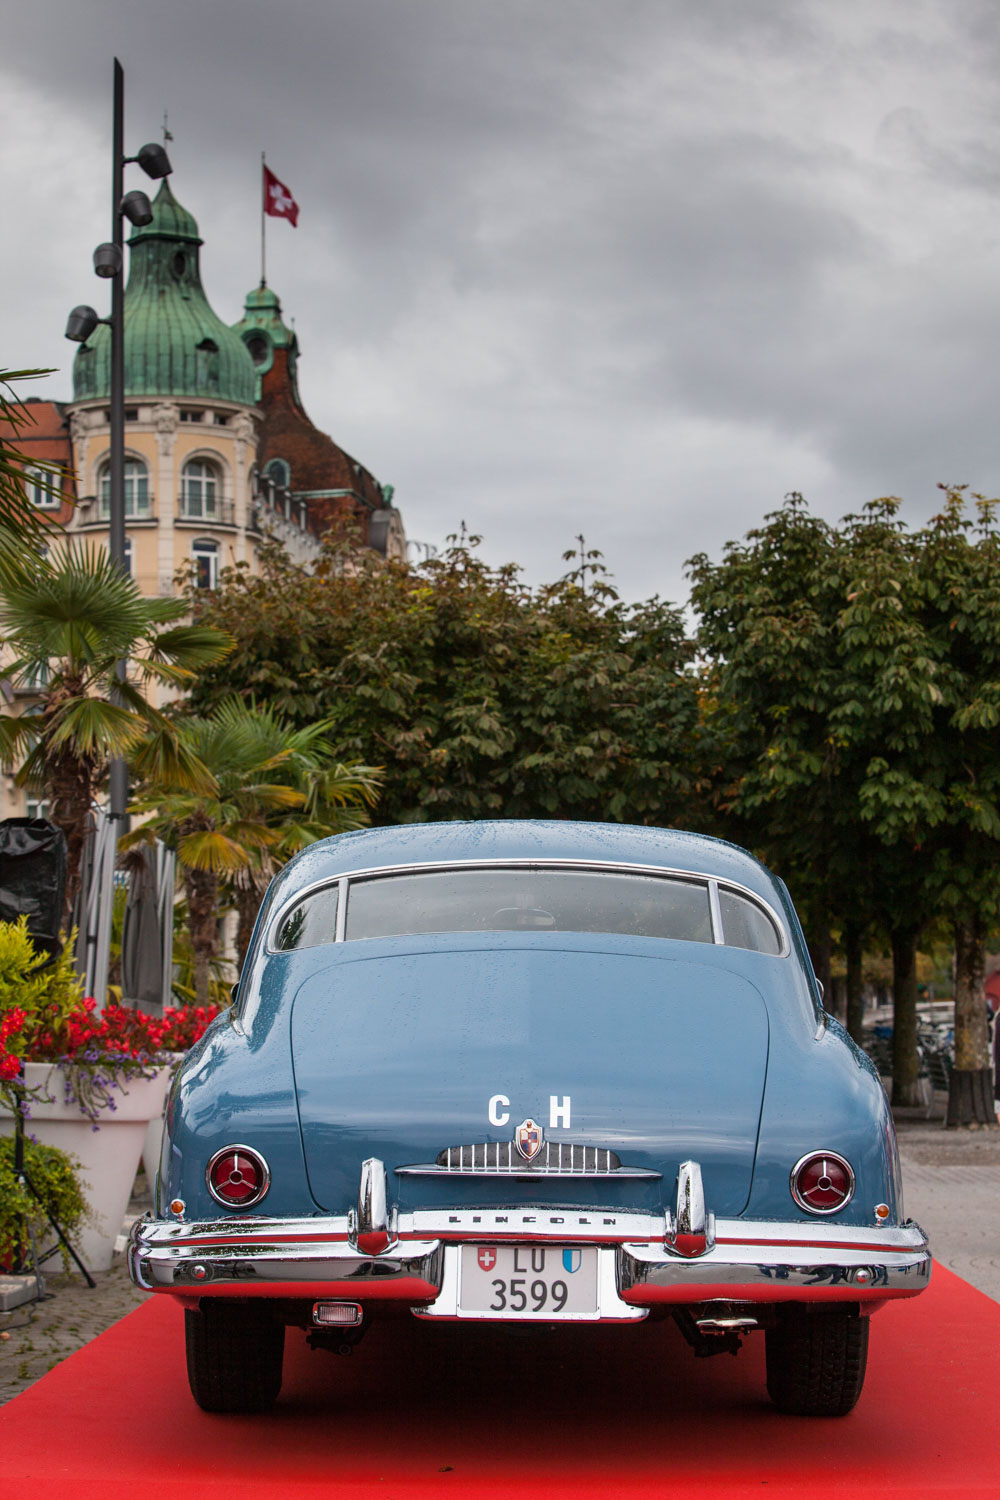 The restored blue Lincoln Cosmopolitan Town Car